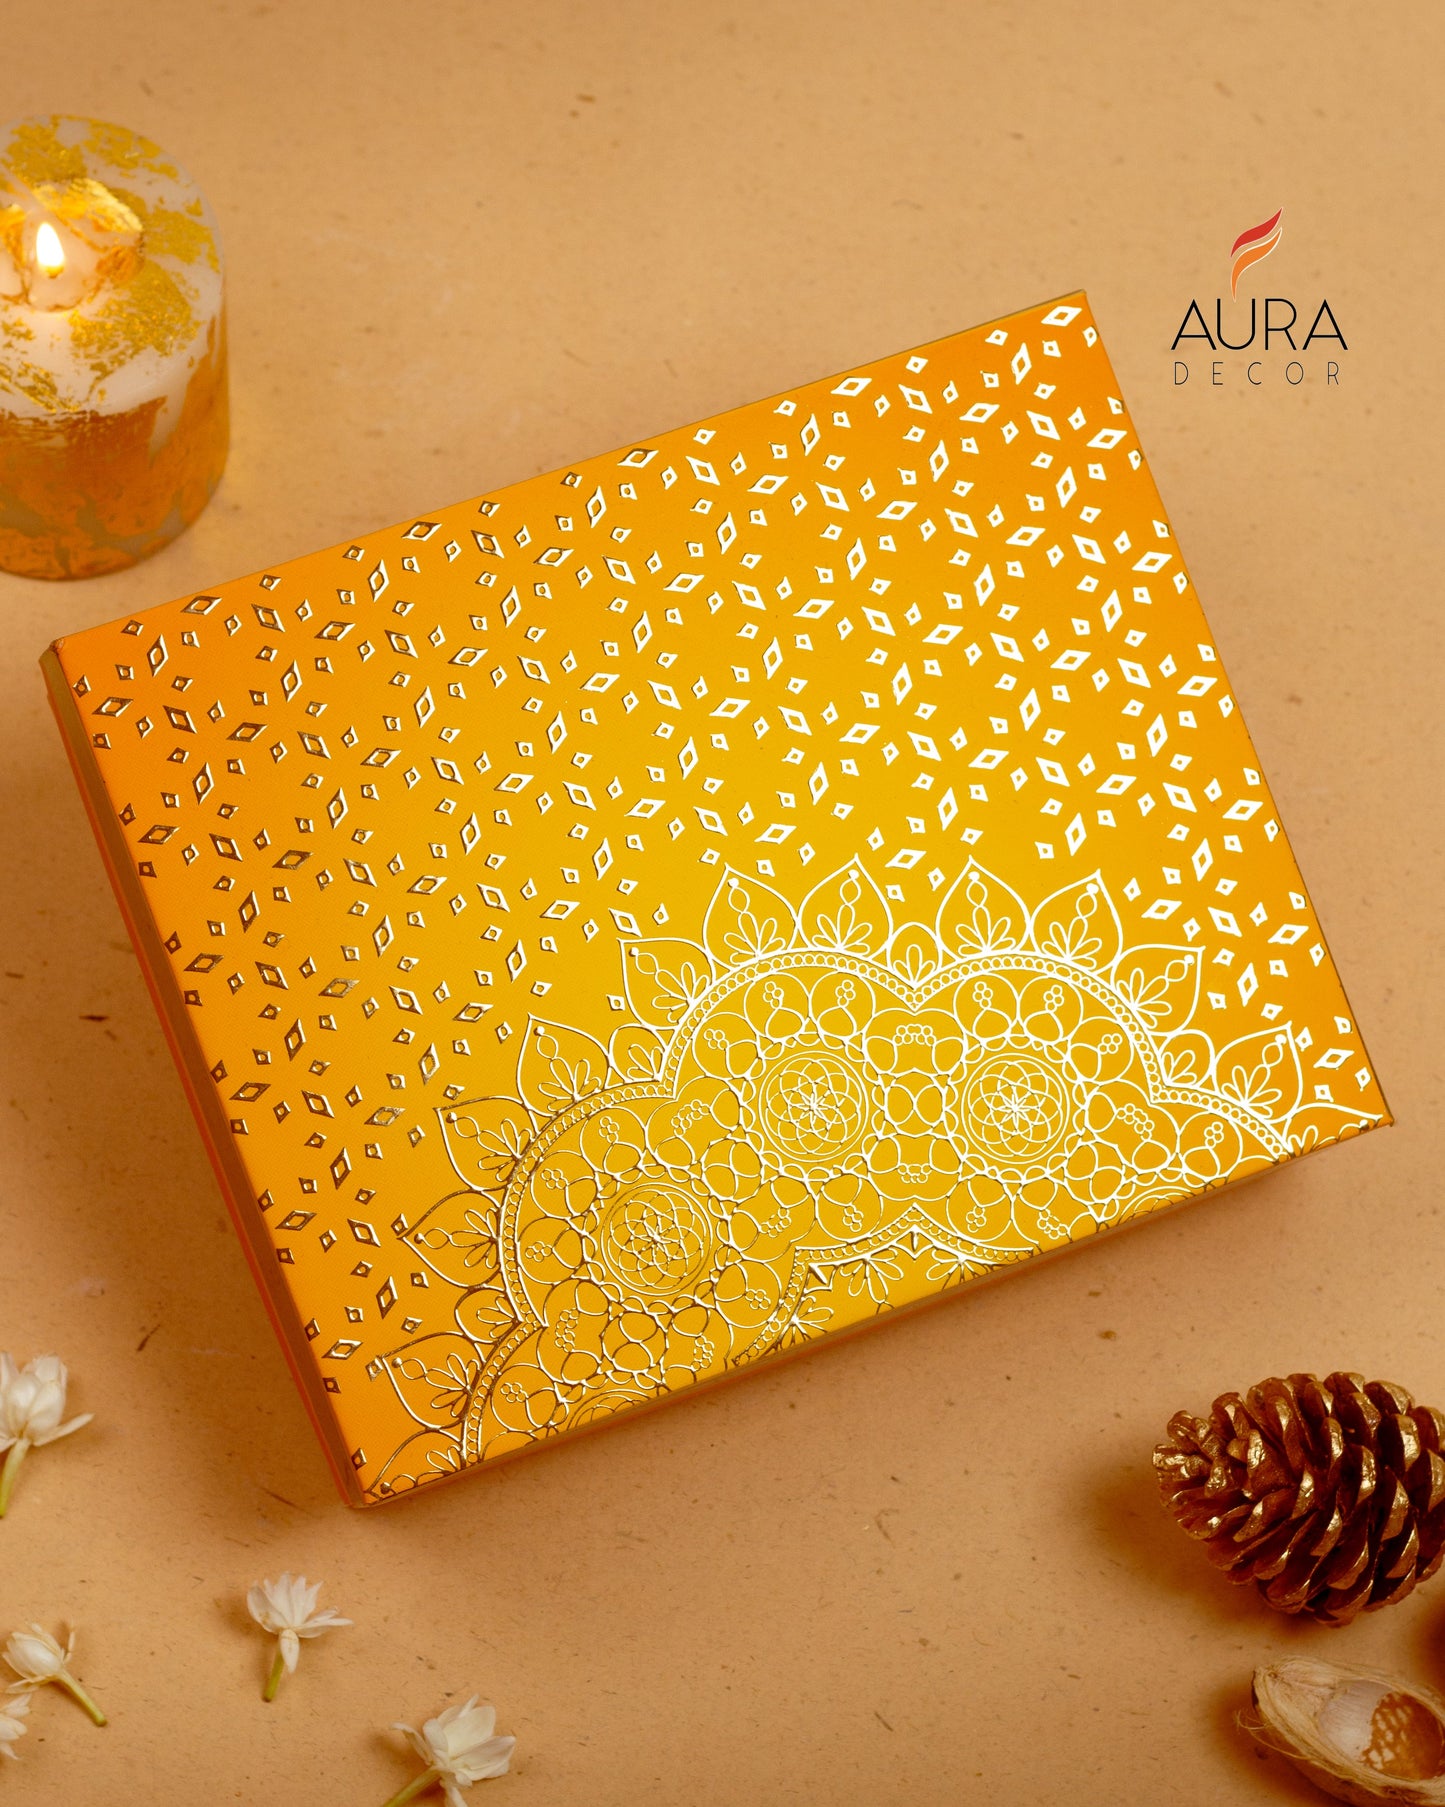 Bulk Buy AuraDecor Urli Gift Set with Floating Candles & Potpourri in a Gift Box ( MOQ 16 Pcs )